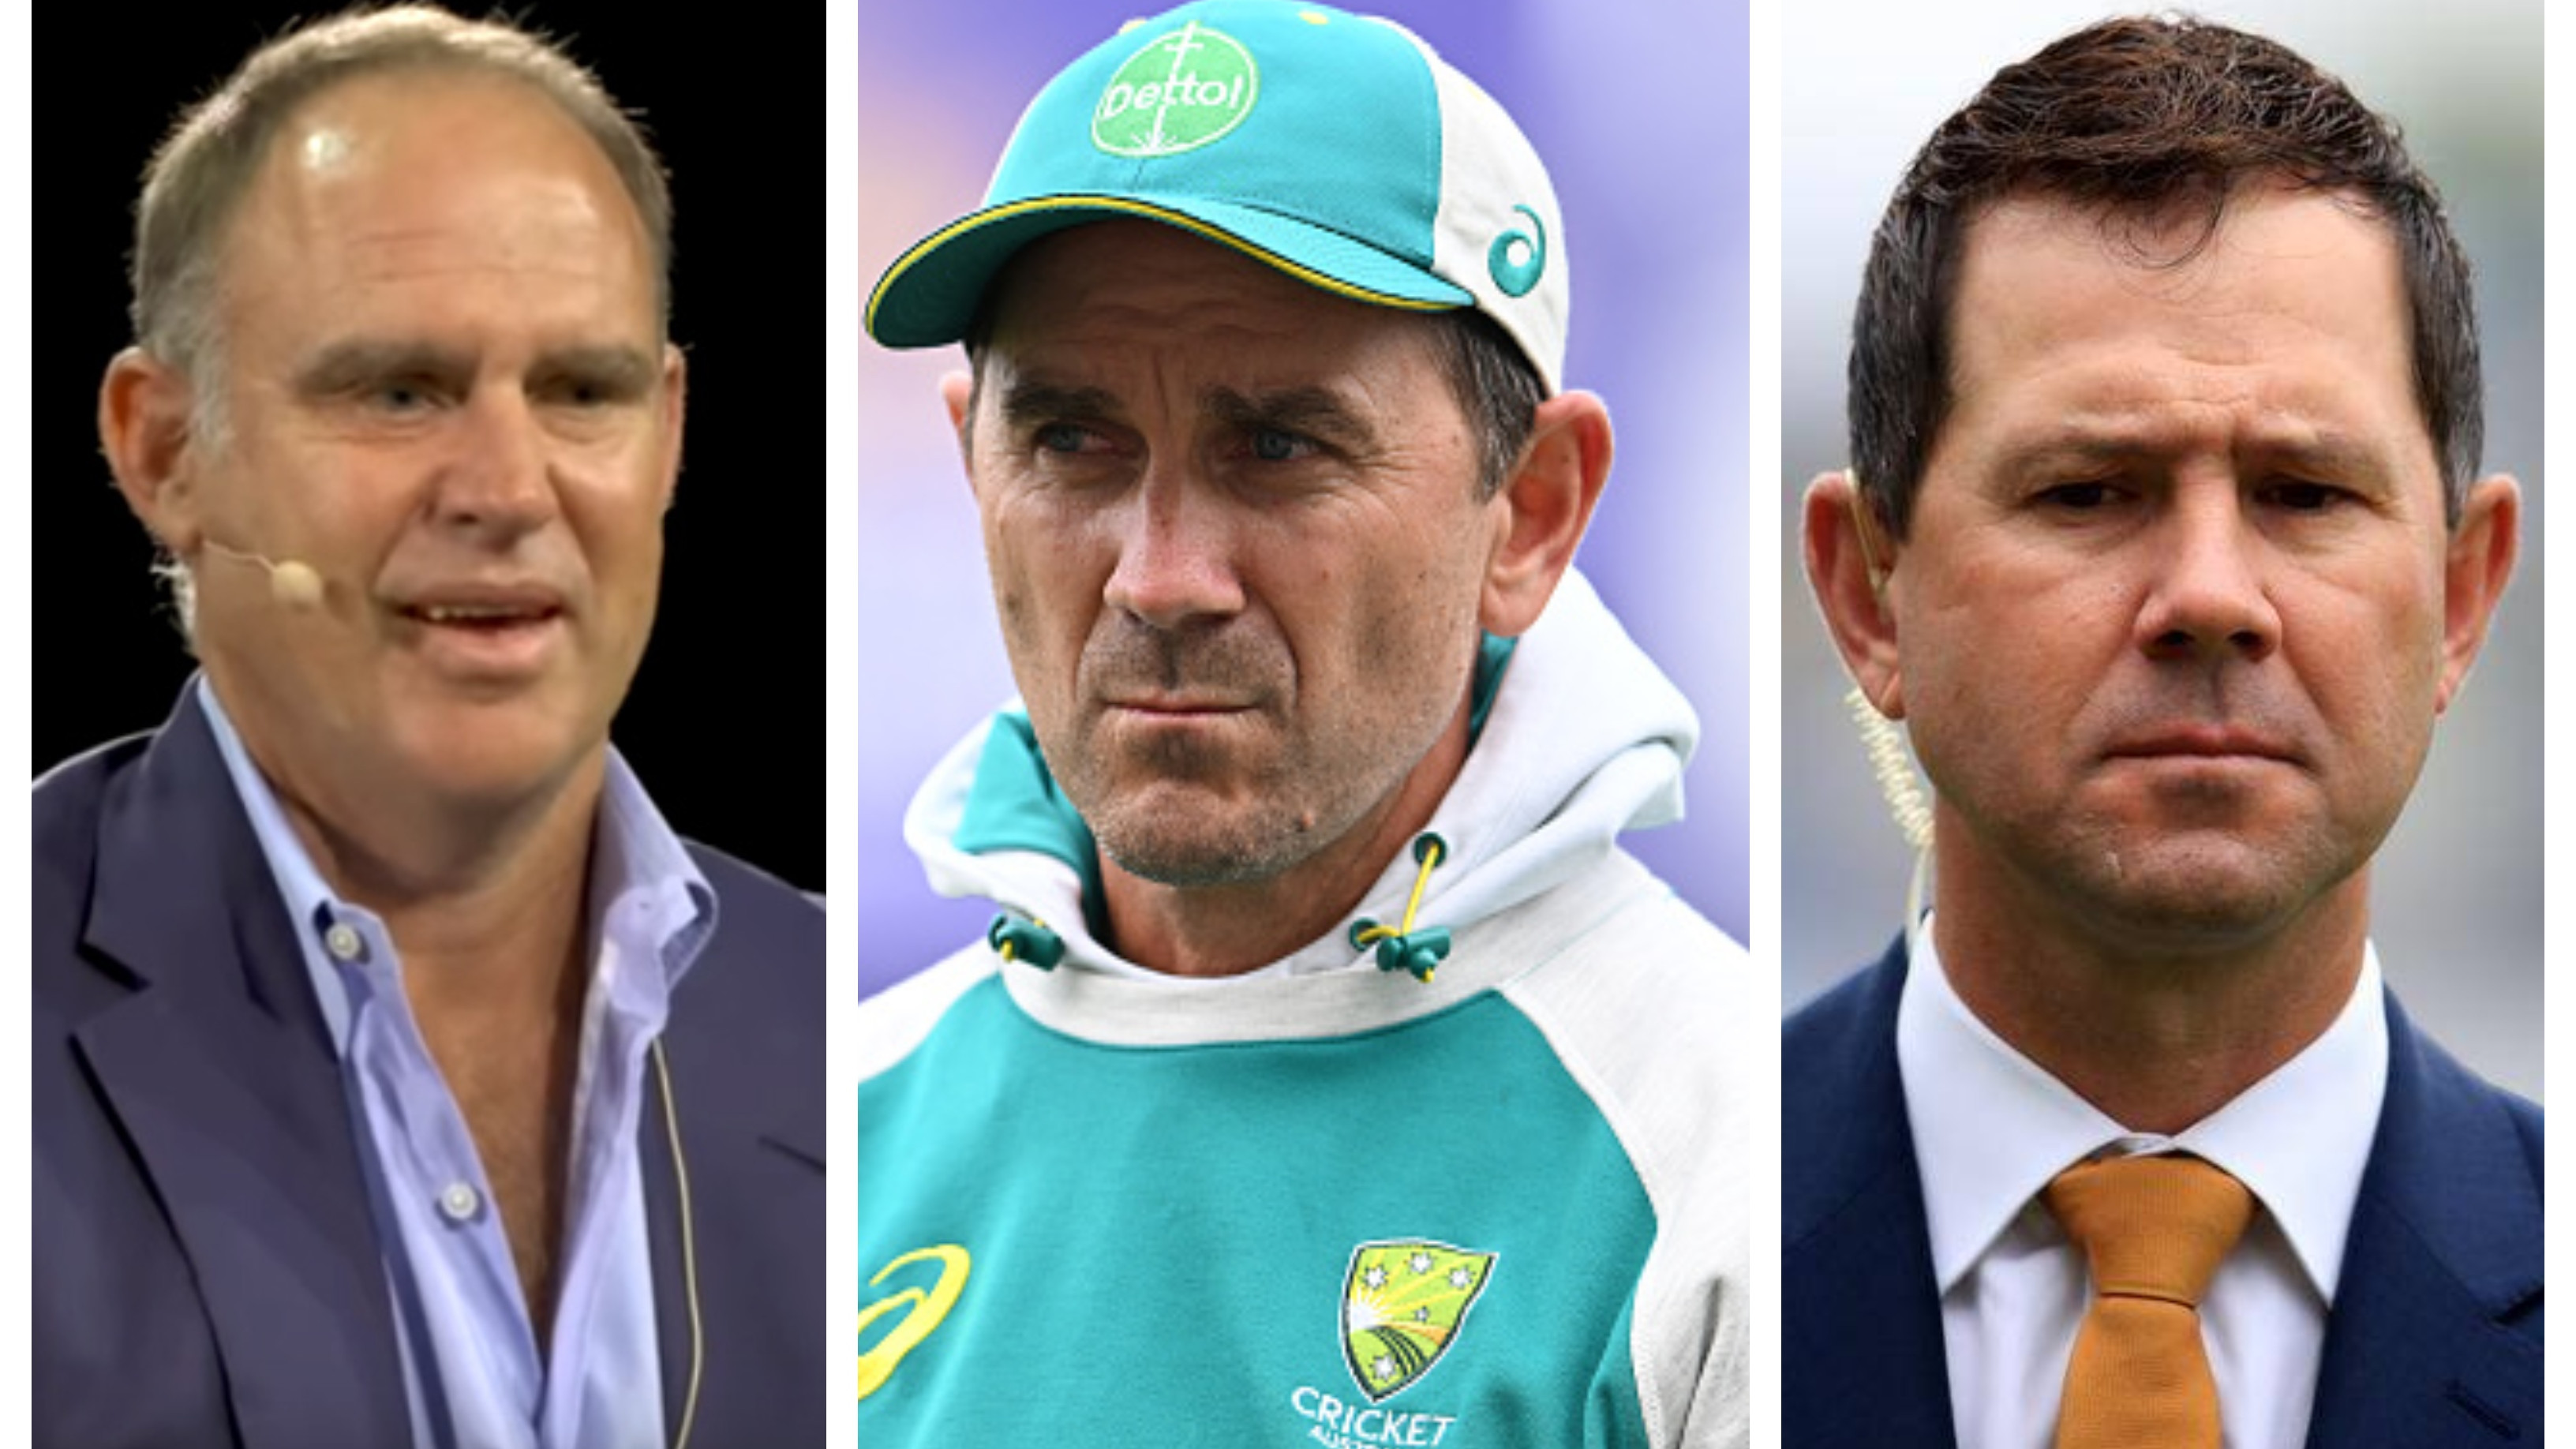 “Almost embarrassing”, Ponting, Hayden lambast Cricket Australia for Justin Langer’s exit